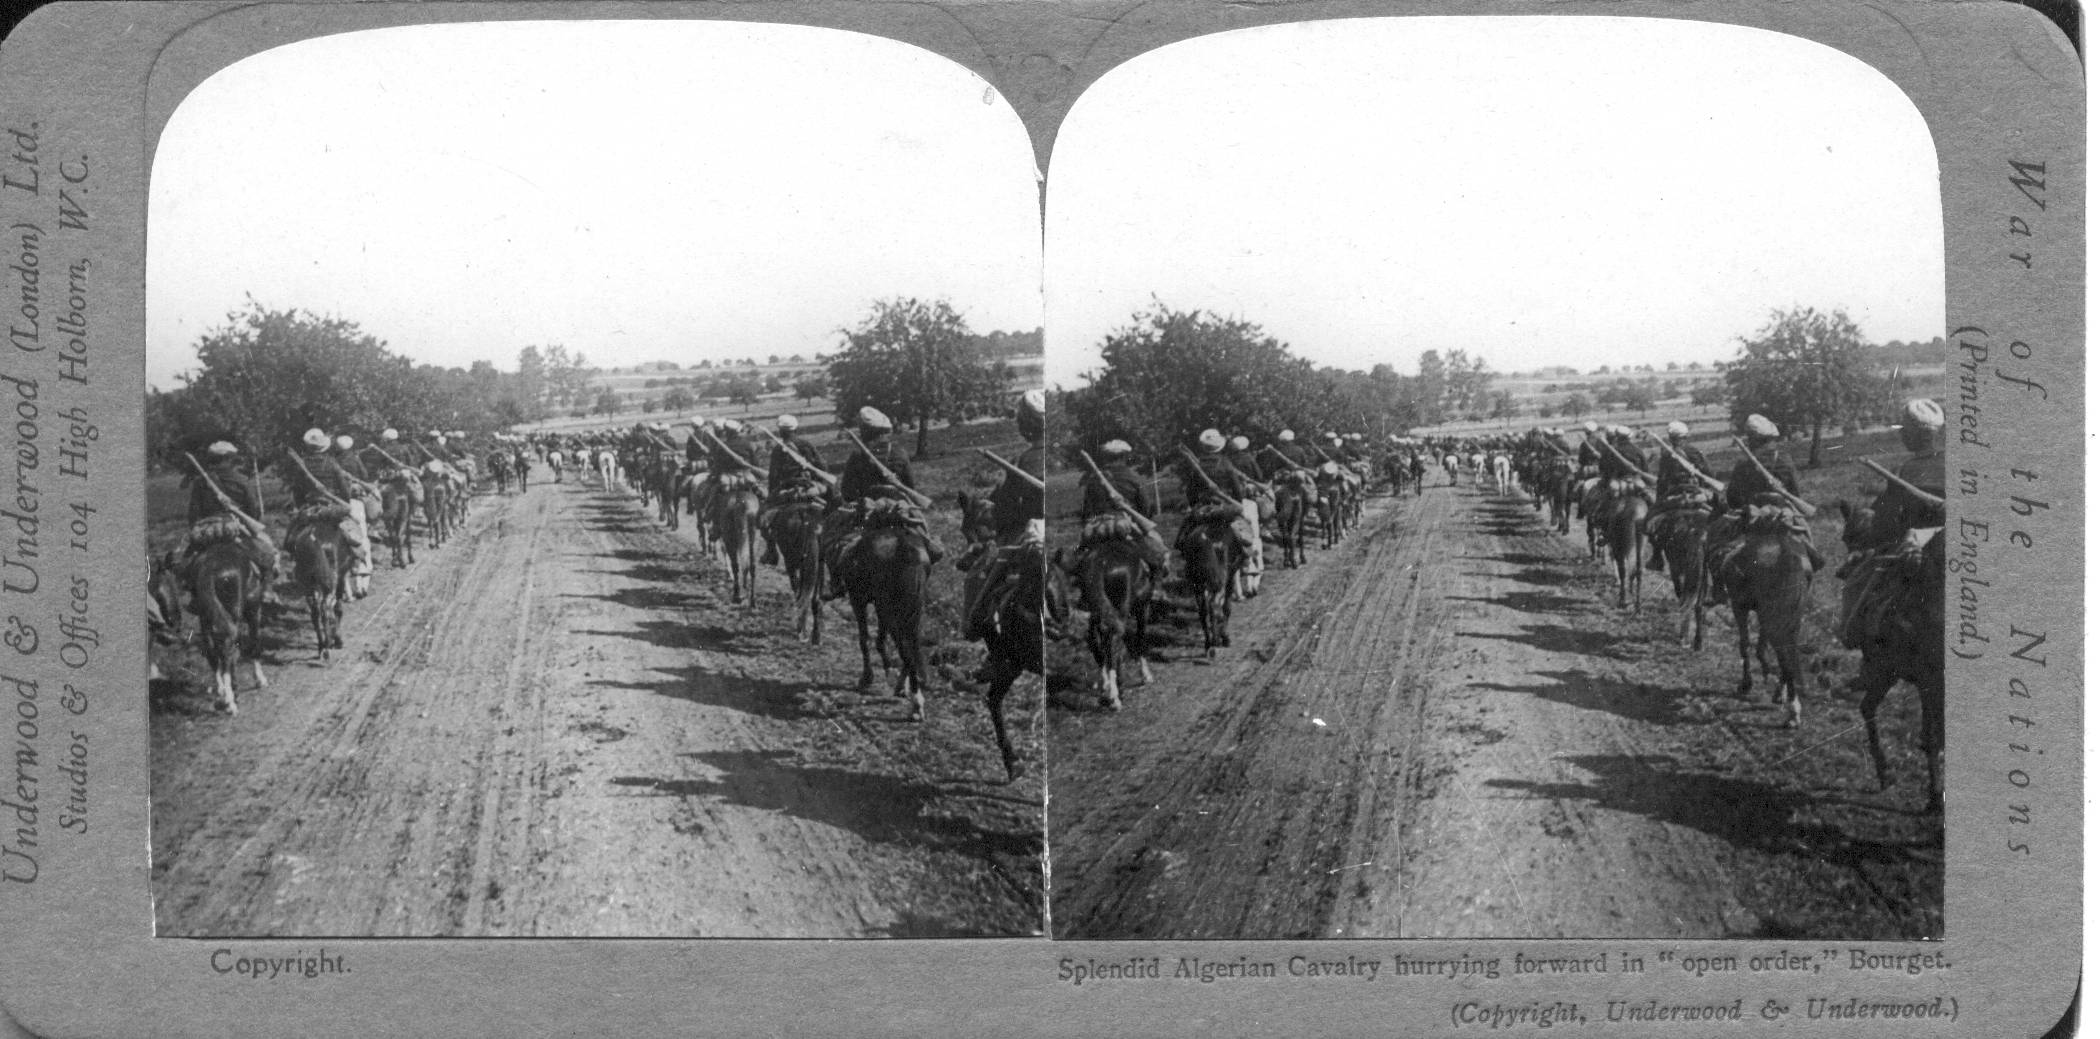 Splendid Algerian Cavalry hurrying forward in "open order," Bourget